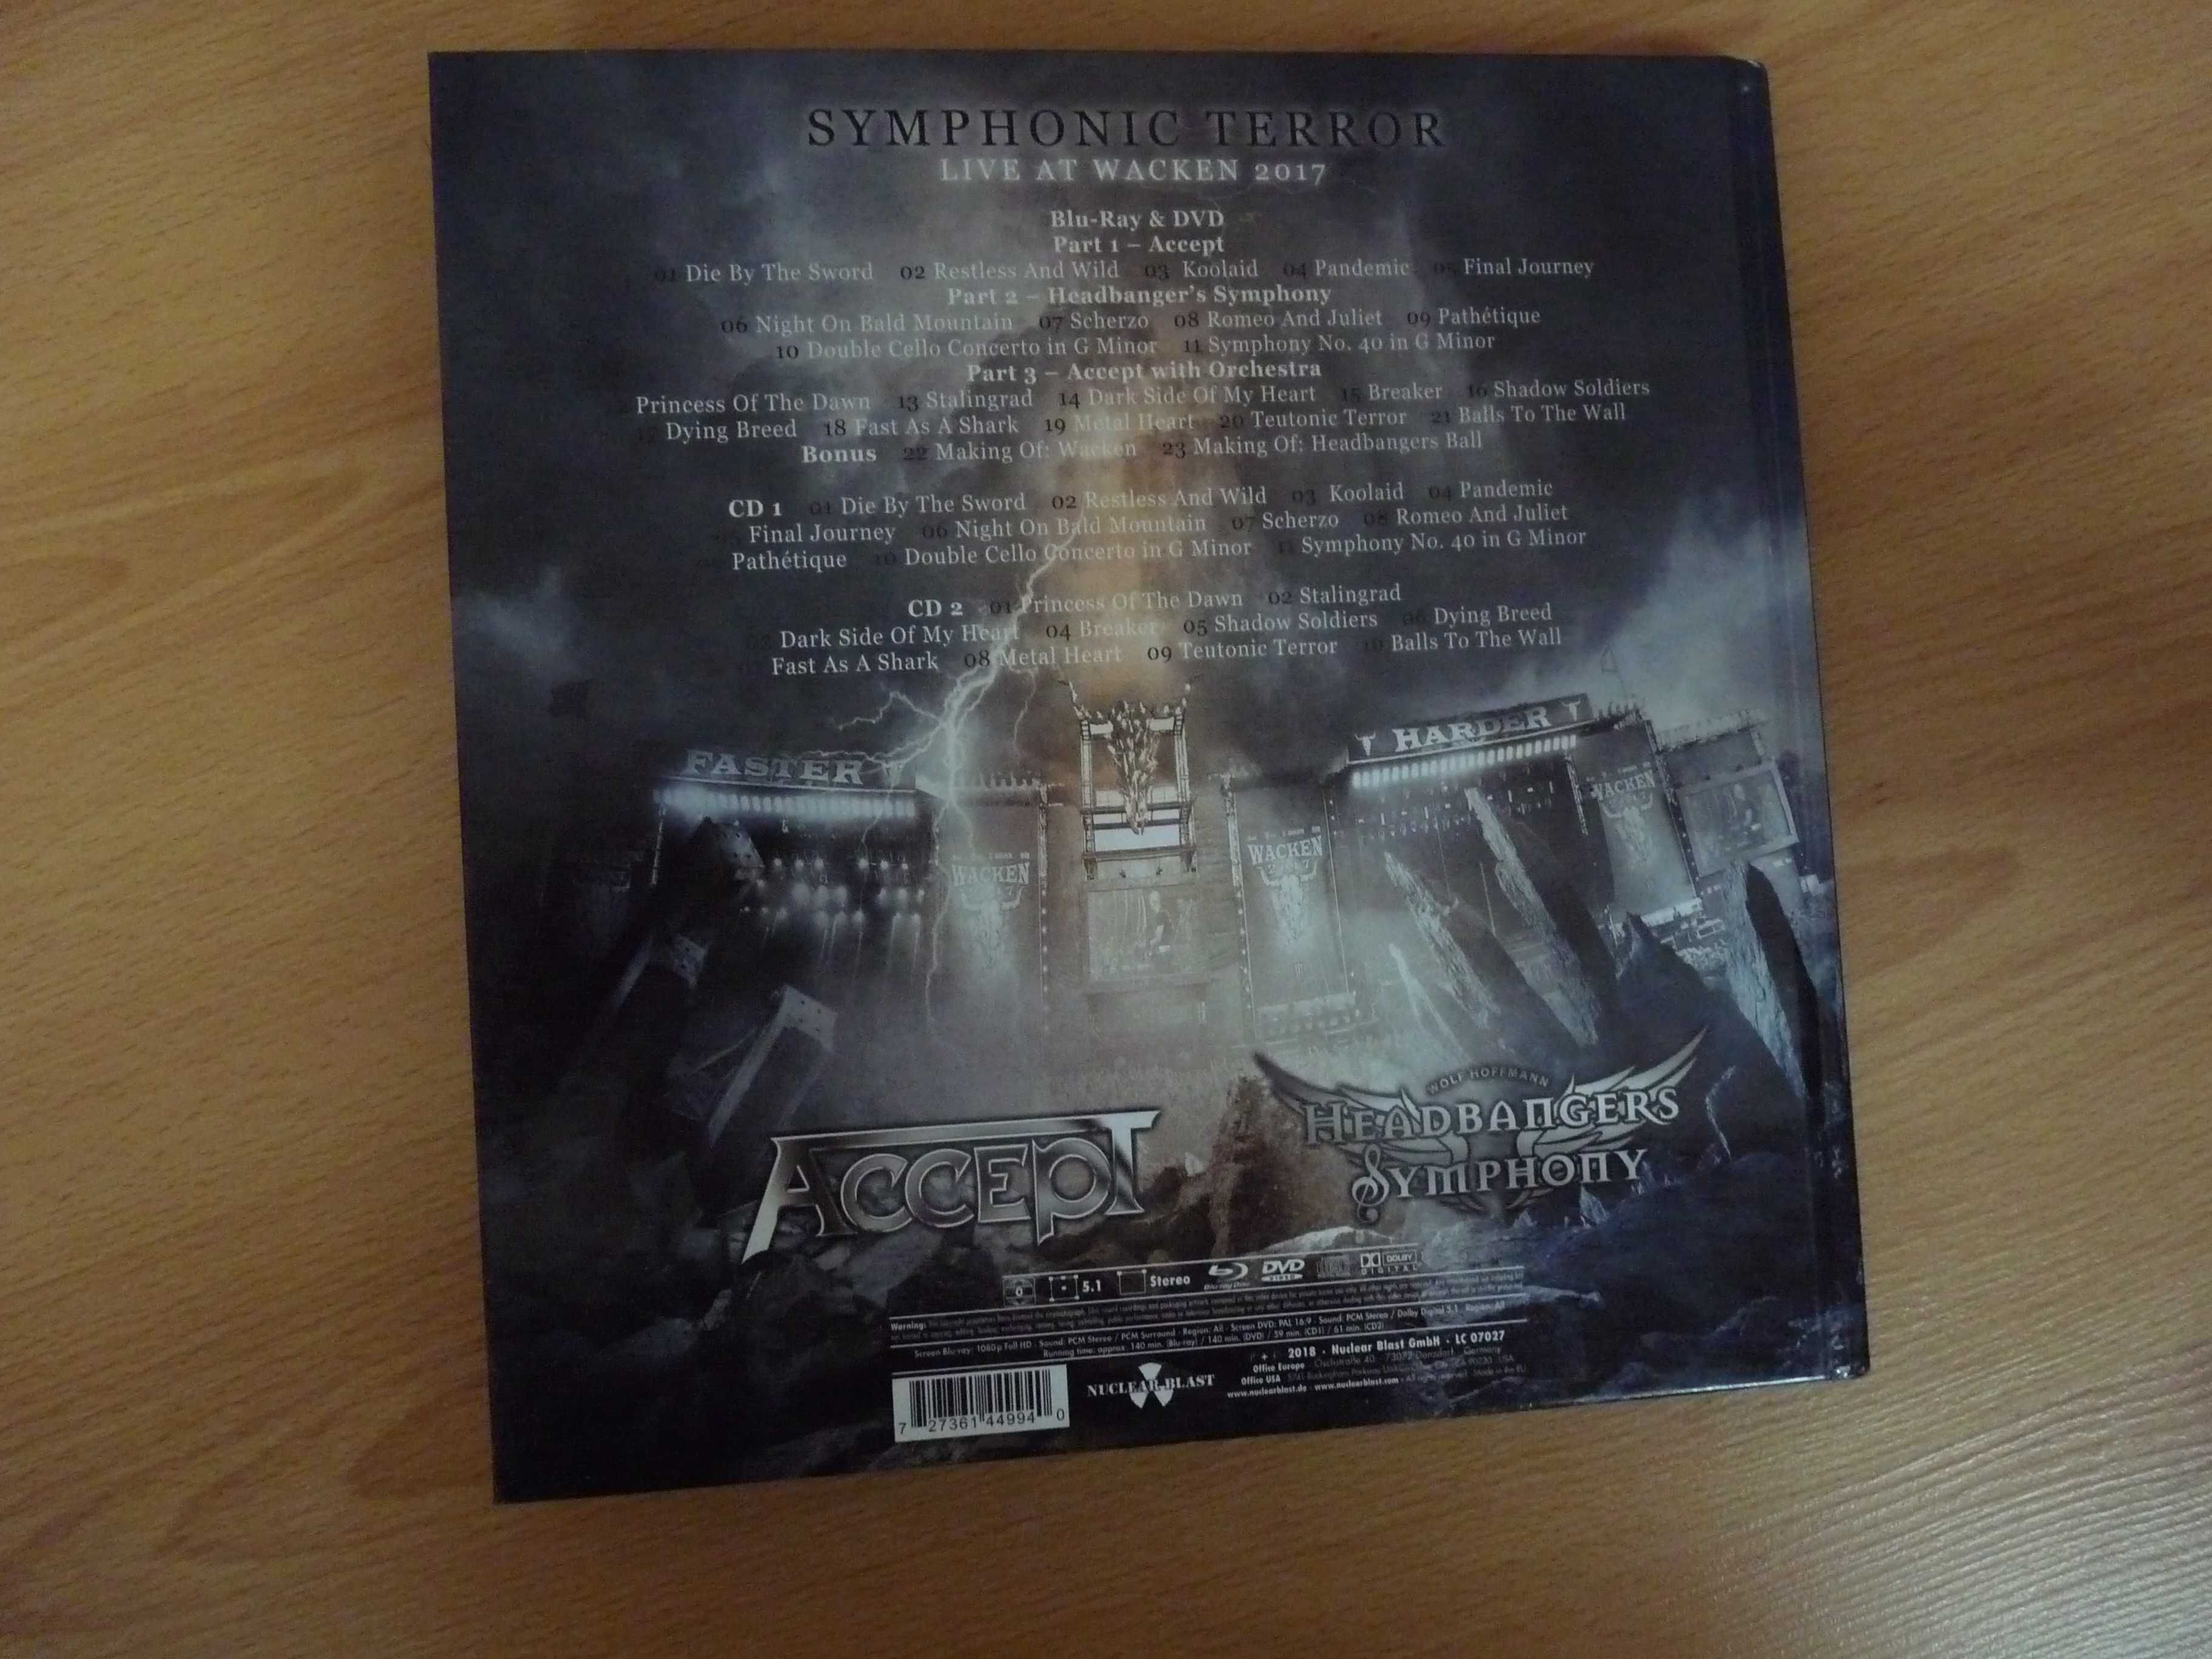 Accept - Symphonic Terror BLU RAY  2 CD  DVD  STAN SUPER  UNIKAT ALBUM